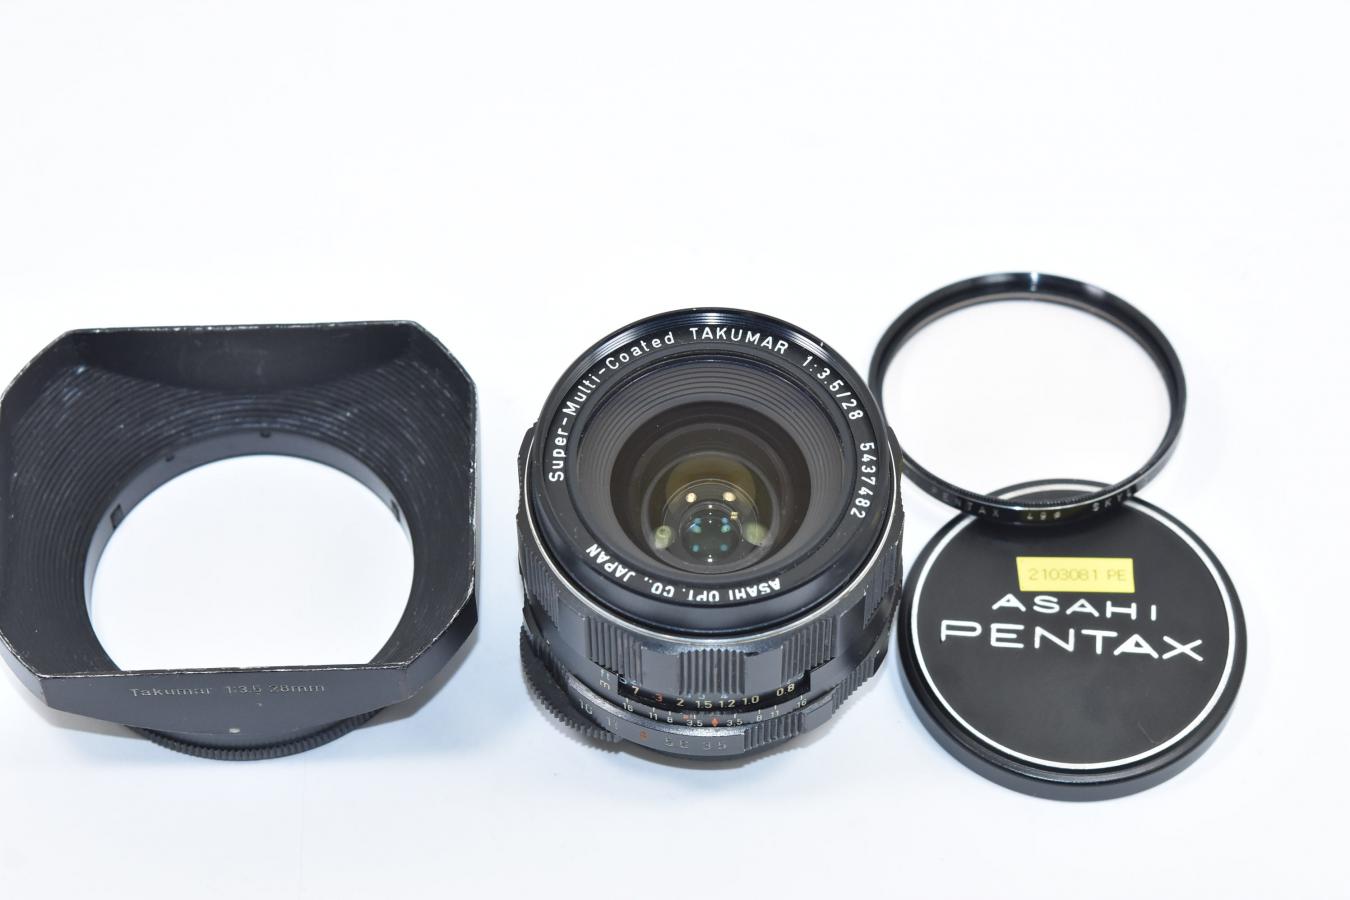 PENTAX Super-Multi-Coated TAKUMAR 28mm F3.5 純正メタルフード、フィルター付 【カメラ女子に絶大な人気のオールドレンズ M42マウントレンズ】